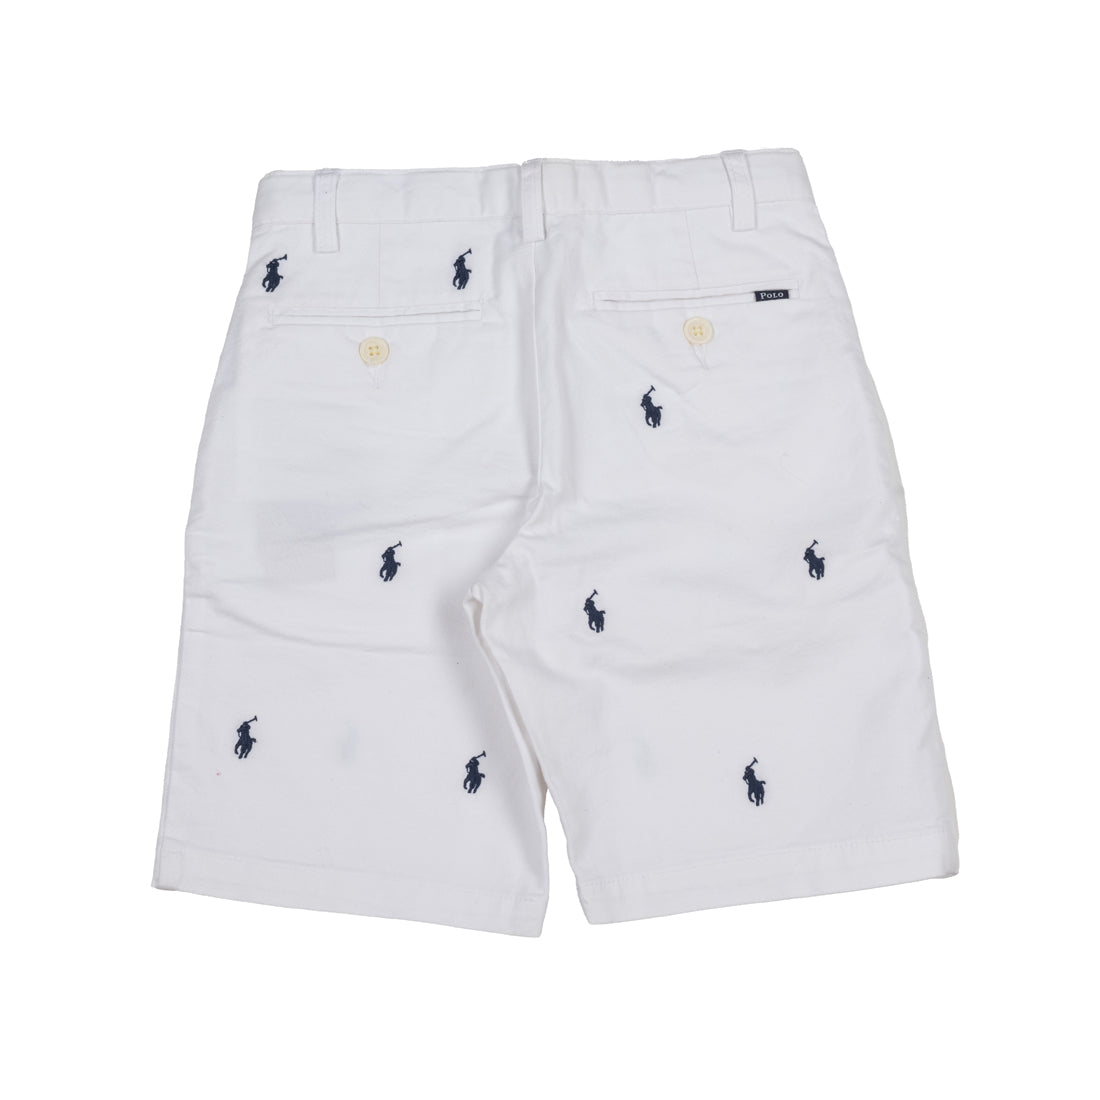 Polo Ralph Lauren Brand New Shorts For Boys